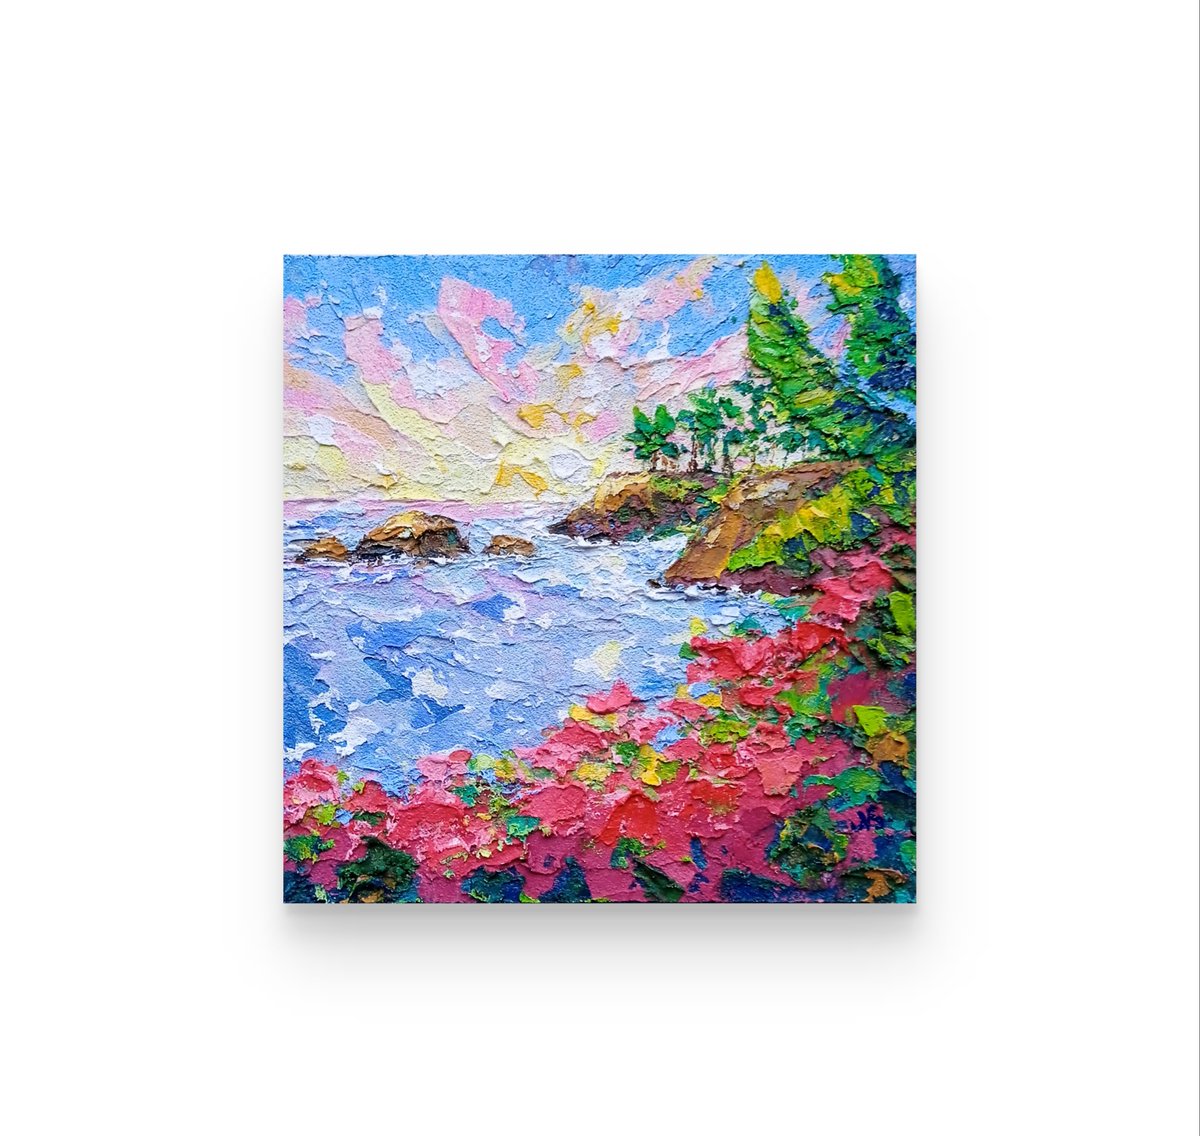 La Jolla painting. #SanDiego #OilPainting #California 8x8 inches
flowersartshopua.etsy.com/listing/172899…

#Beach #OriginalArt #PalmTree #Wildflower #Seascape #ImpastoPainting #birthdaygift #fatherdaygift